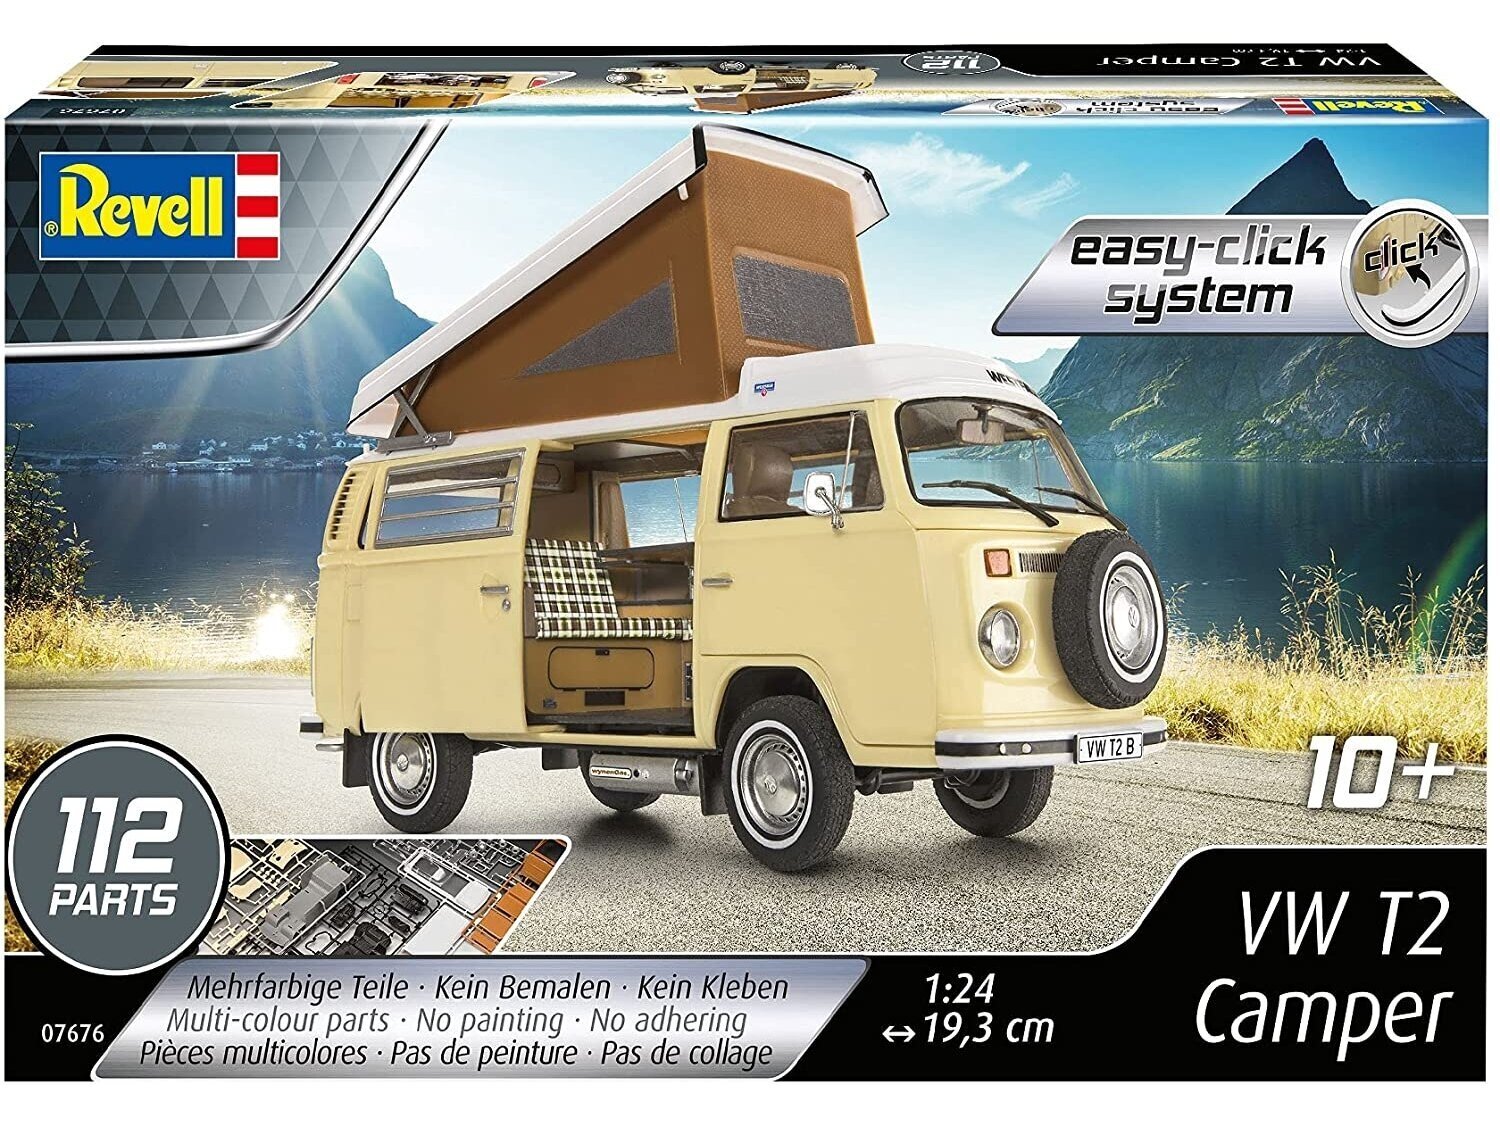 Сборная пластиковая модель Revell - VW T2 Camper (easy-click), 1/24, 07676  цена